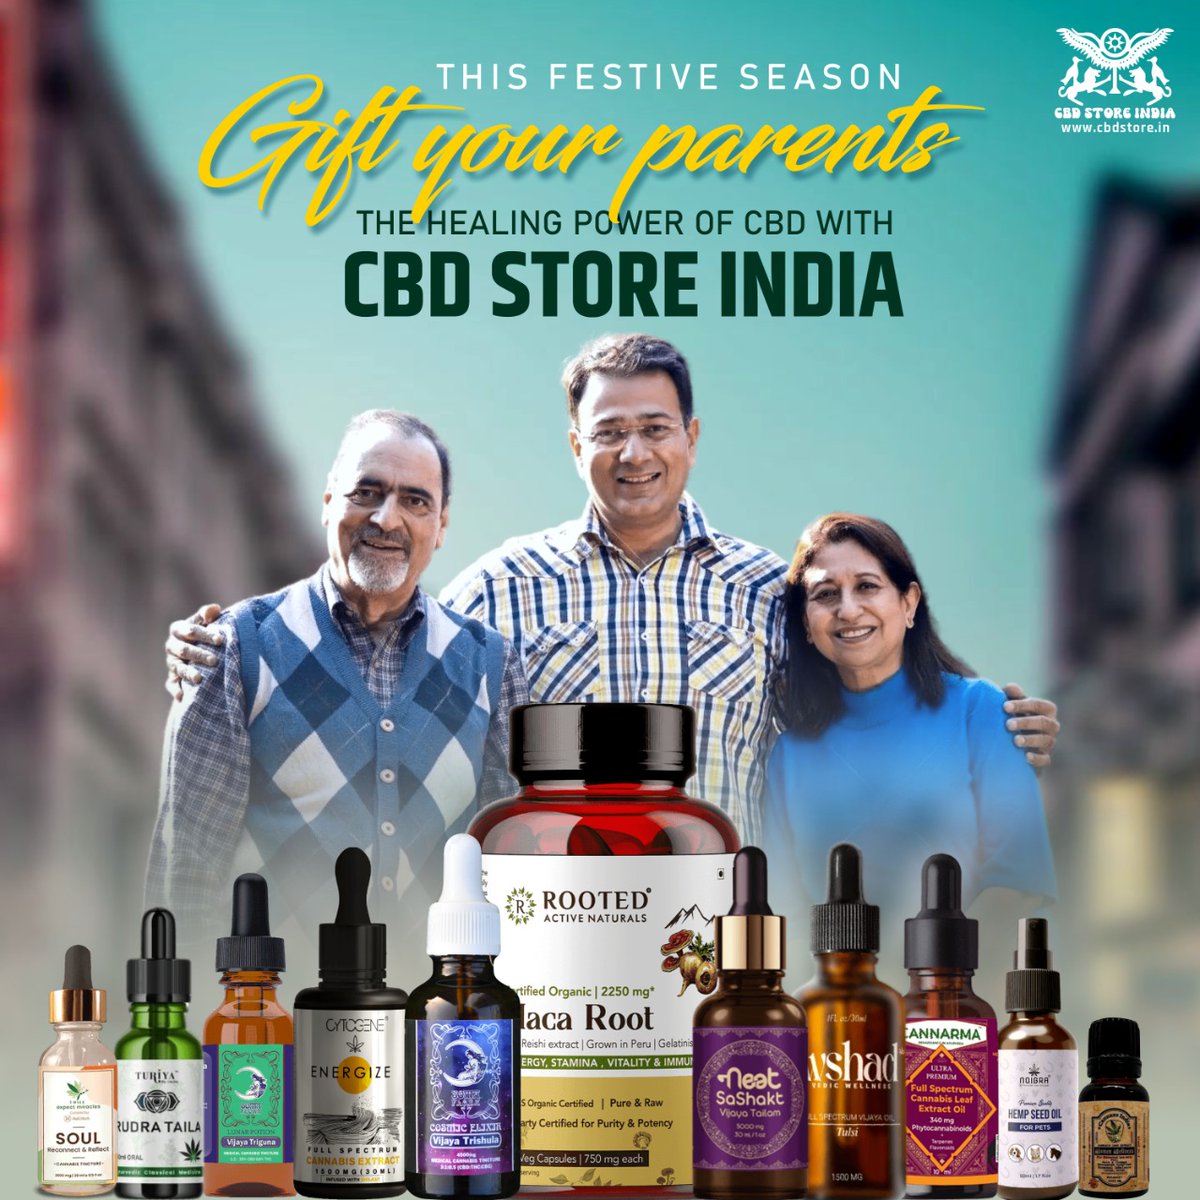 Explore our wide range of premium products & buy here: linkpop.com/csin #cbdlove #cbd #cbdhealth #cbdheals #hempproducts #hempoil #hempskincare #stressed #cannabis #cannabidiol #health #cbdstore #cbdstoreindia #cbdproductsindia #cbdproducts